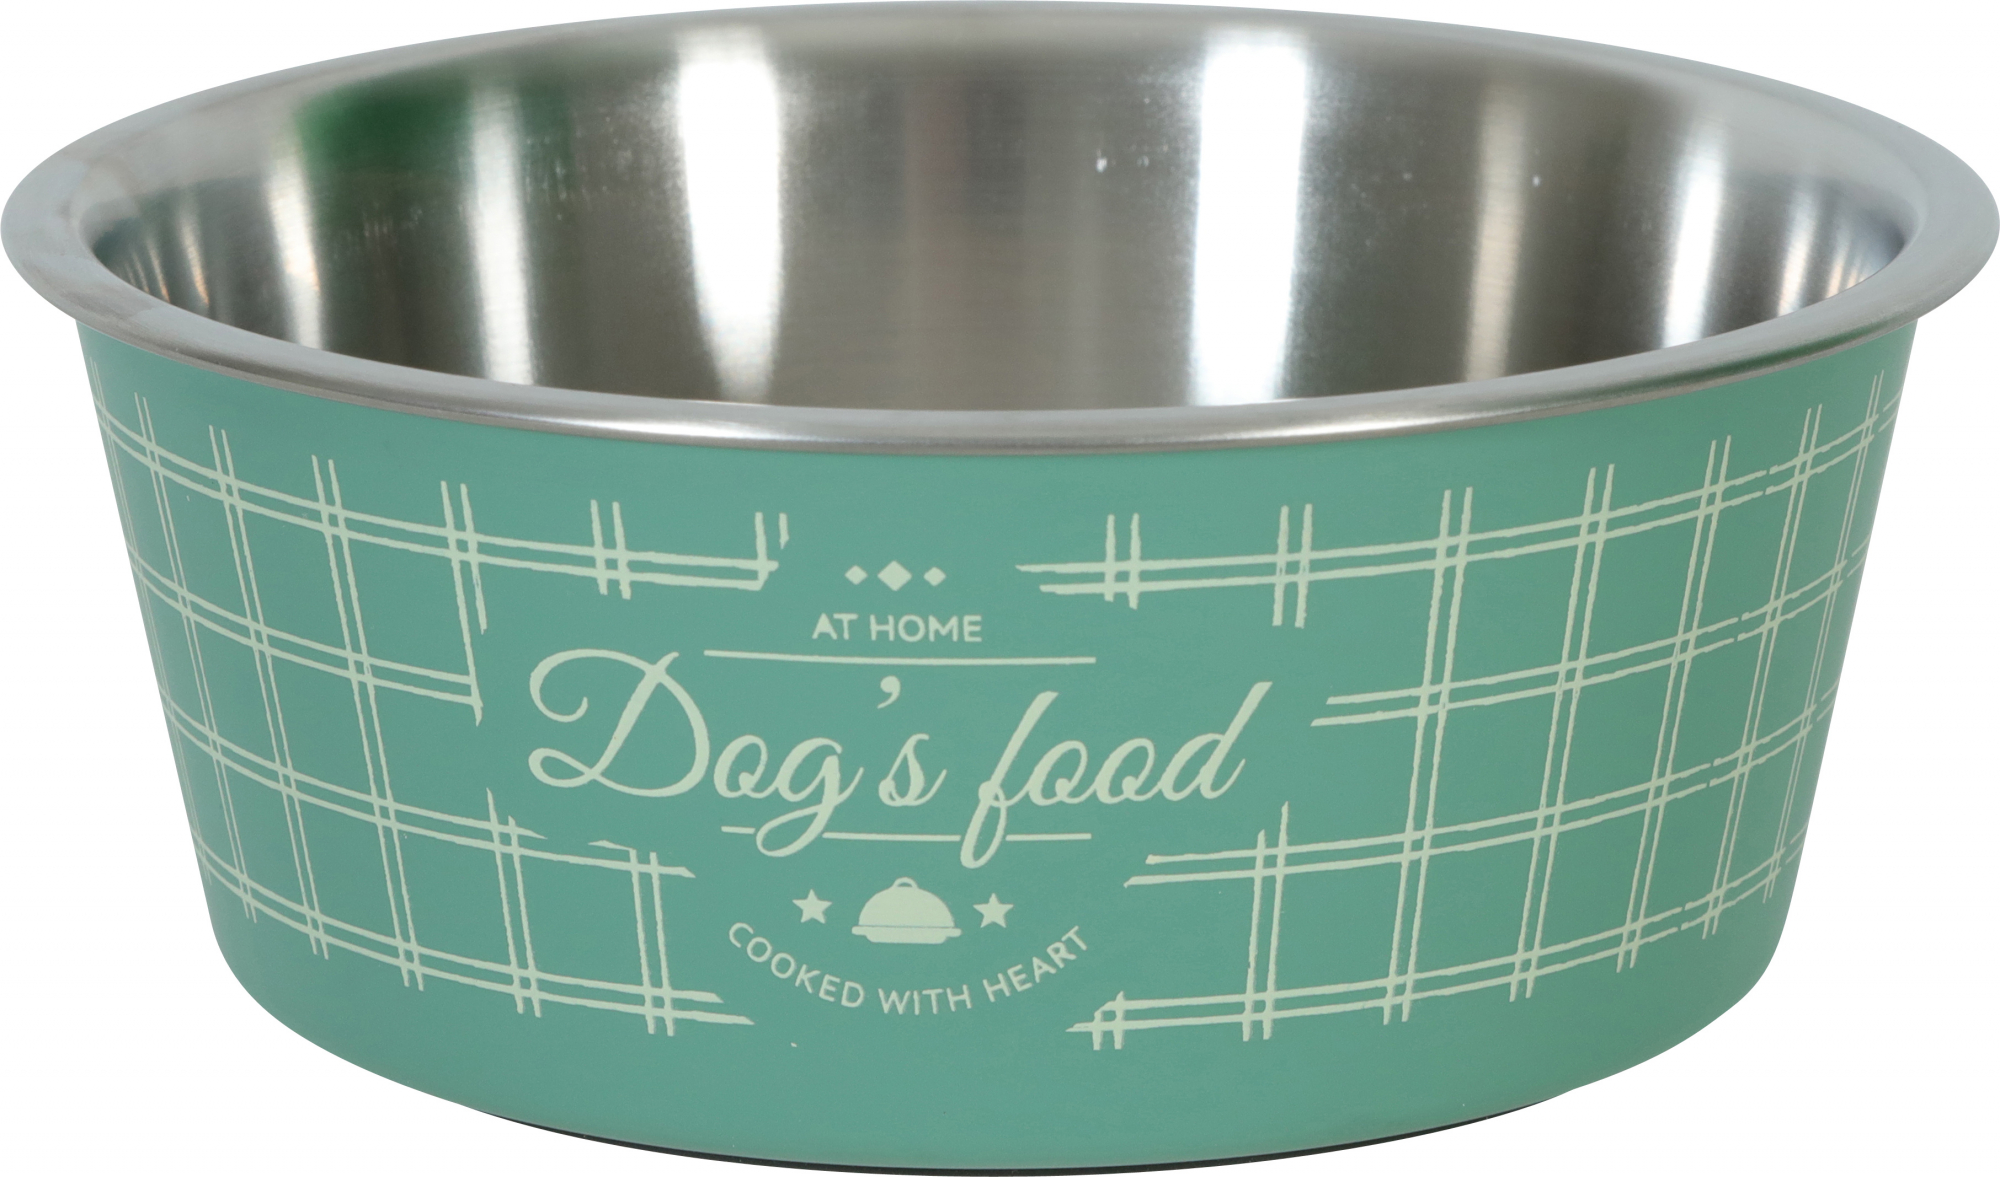 RVS antislip voederbak Food dog - Groen